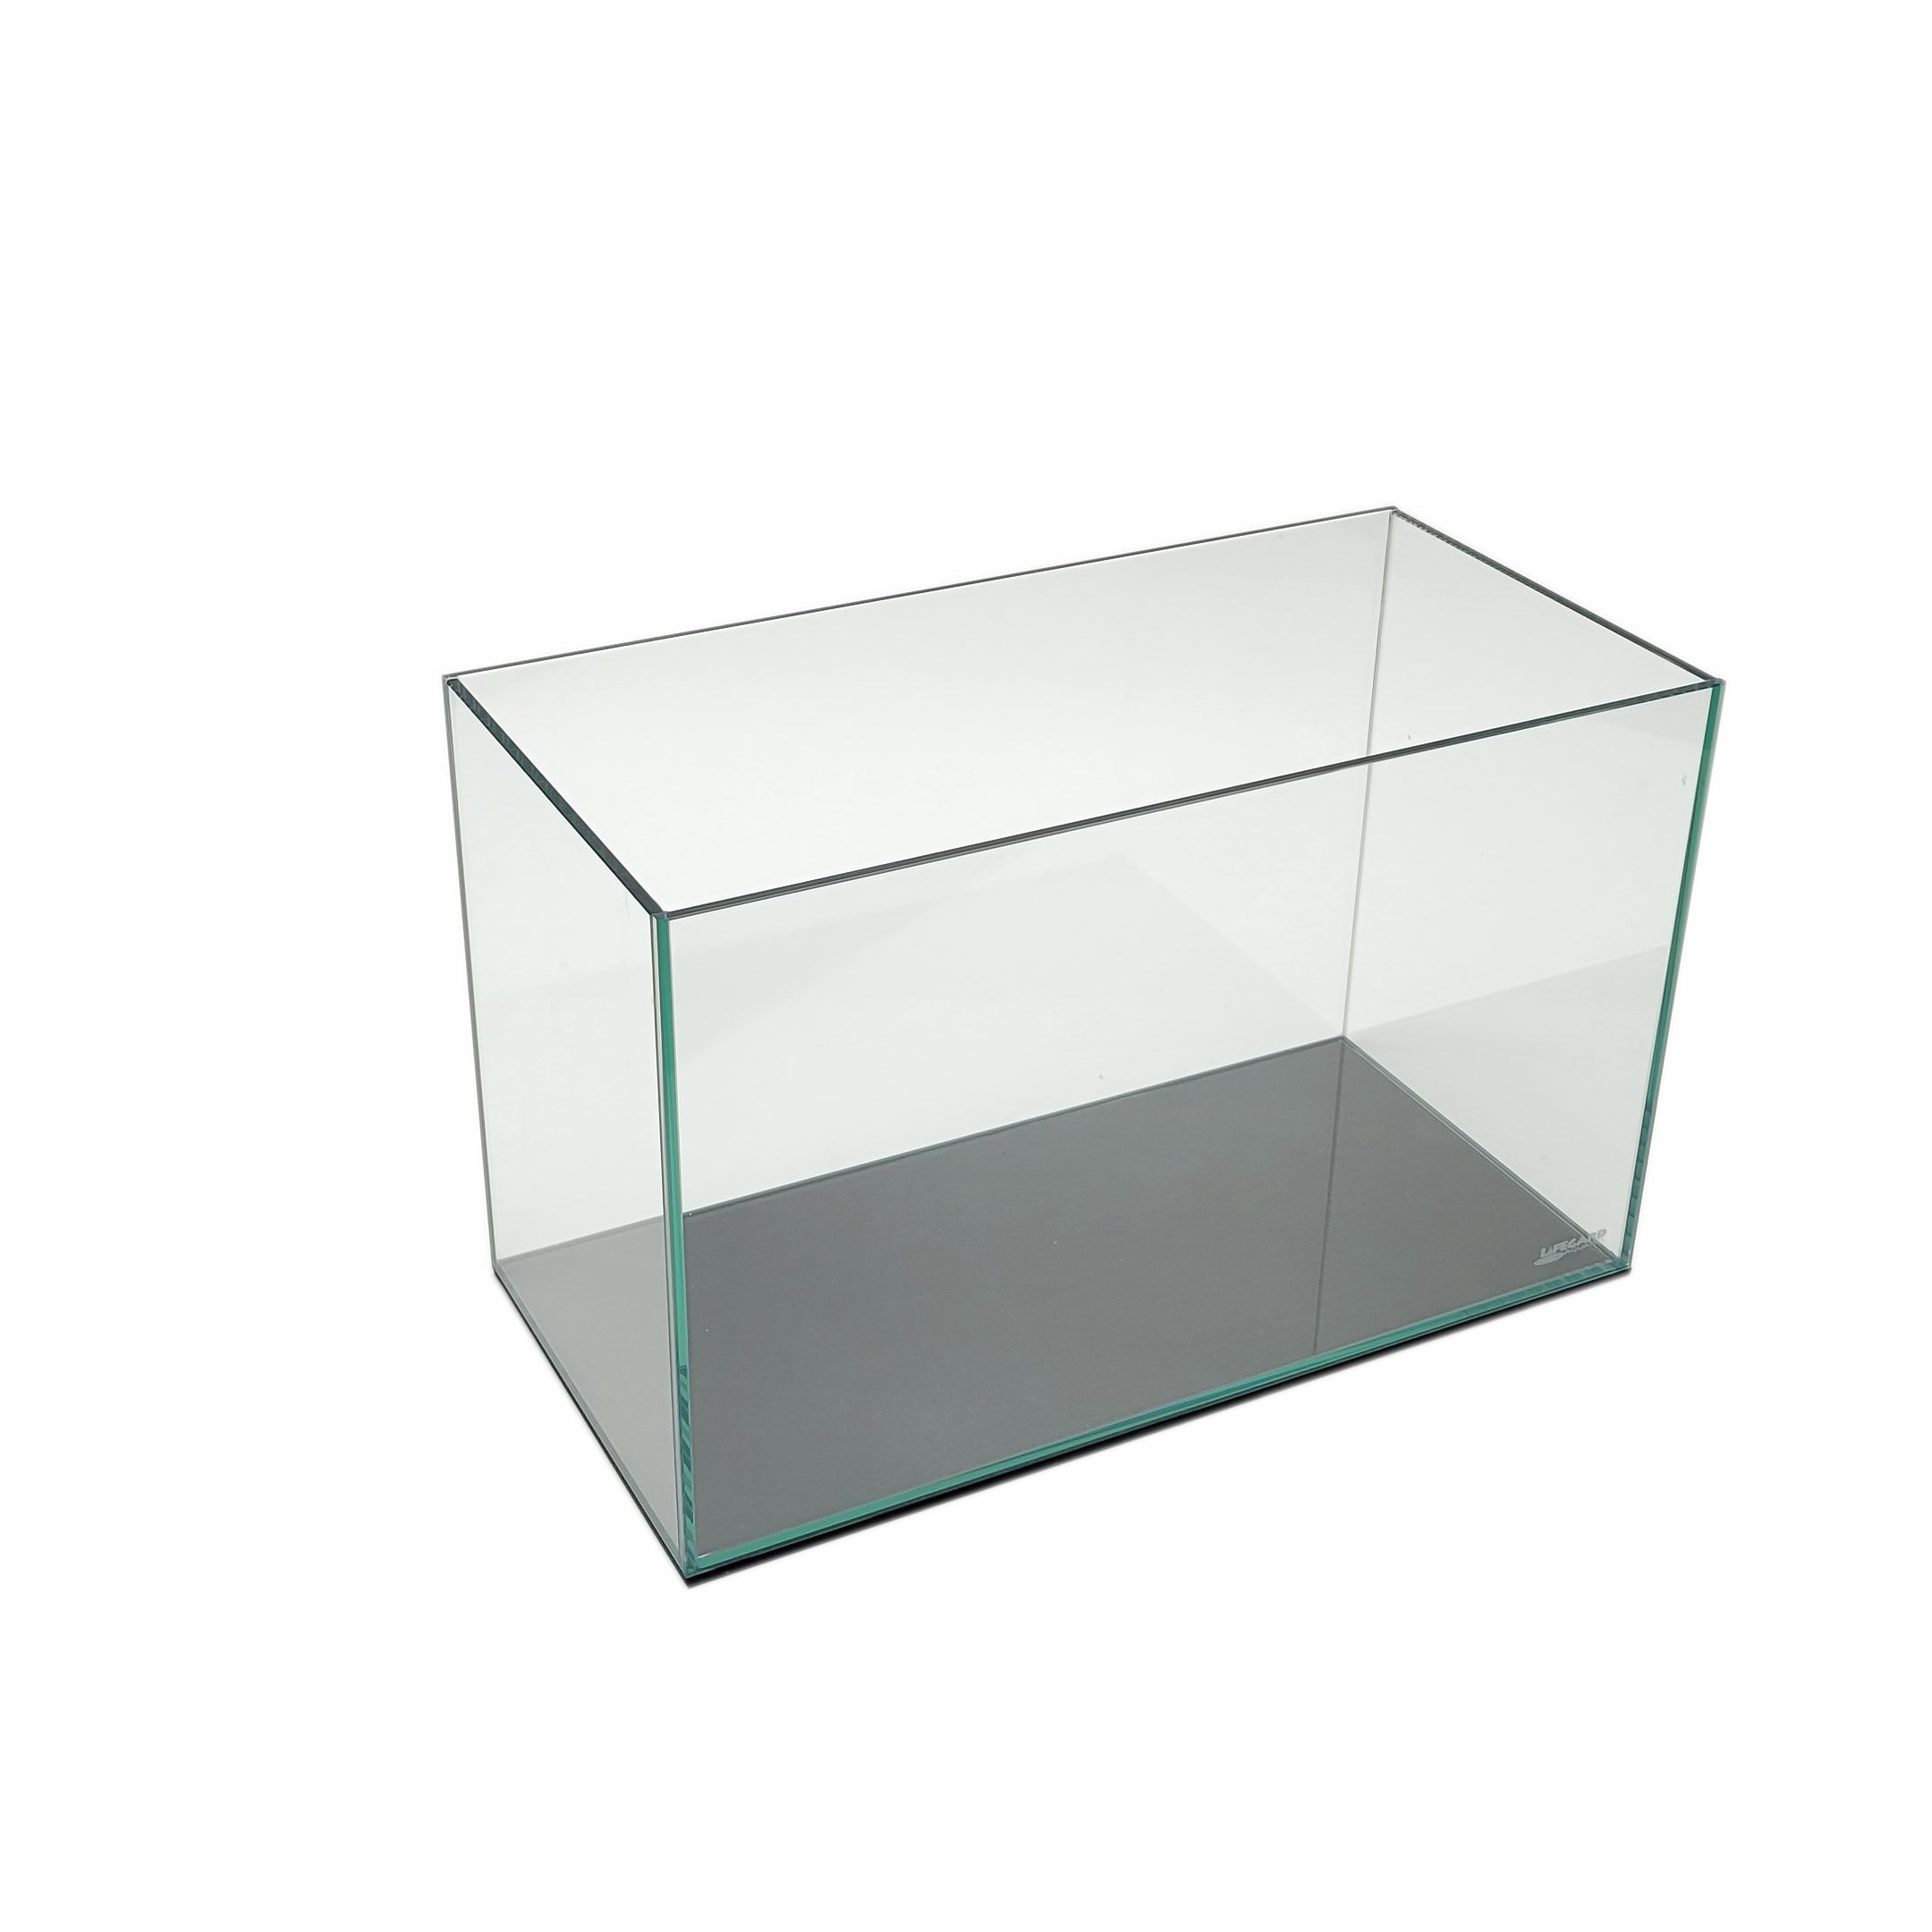 tekst Professor Belegering 5 Gallon Rimless Clear Glass Aquarium 5mm (15.74"x7.87"x9.84") - Lifegard  Aquatics